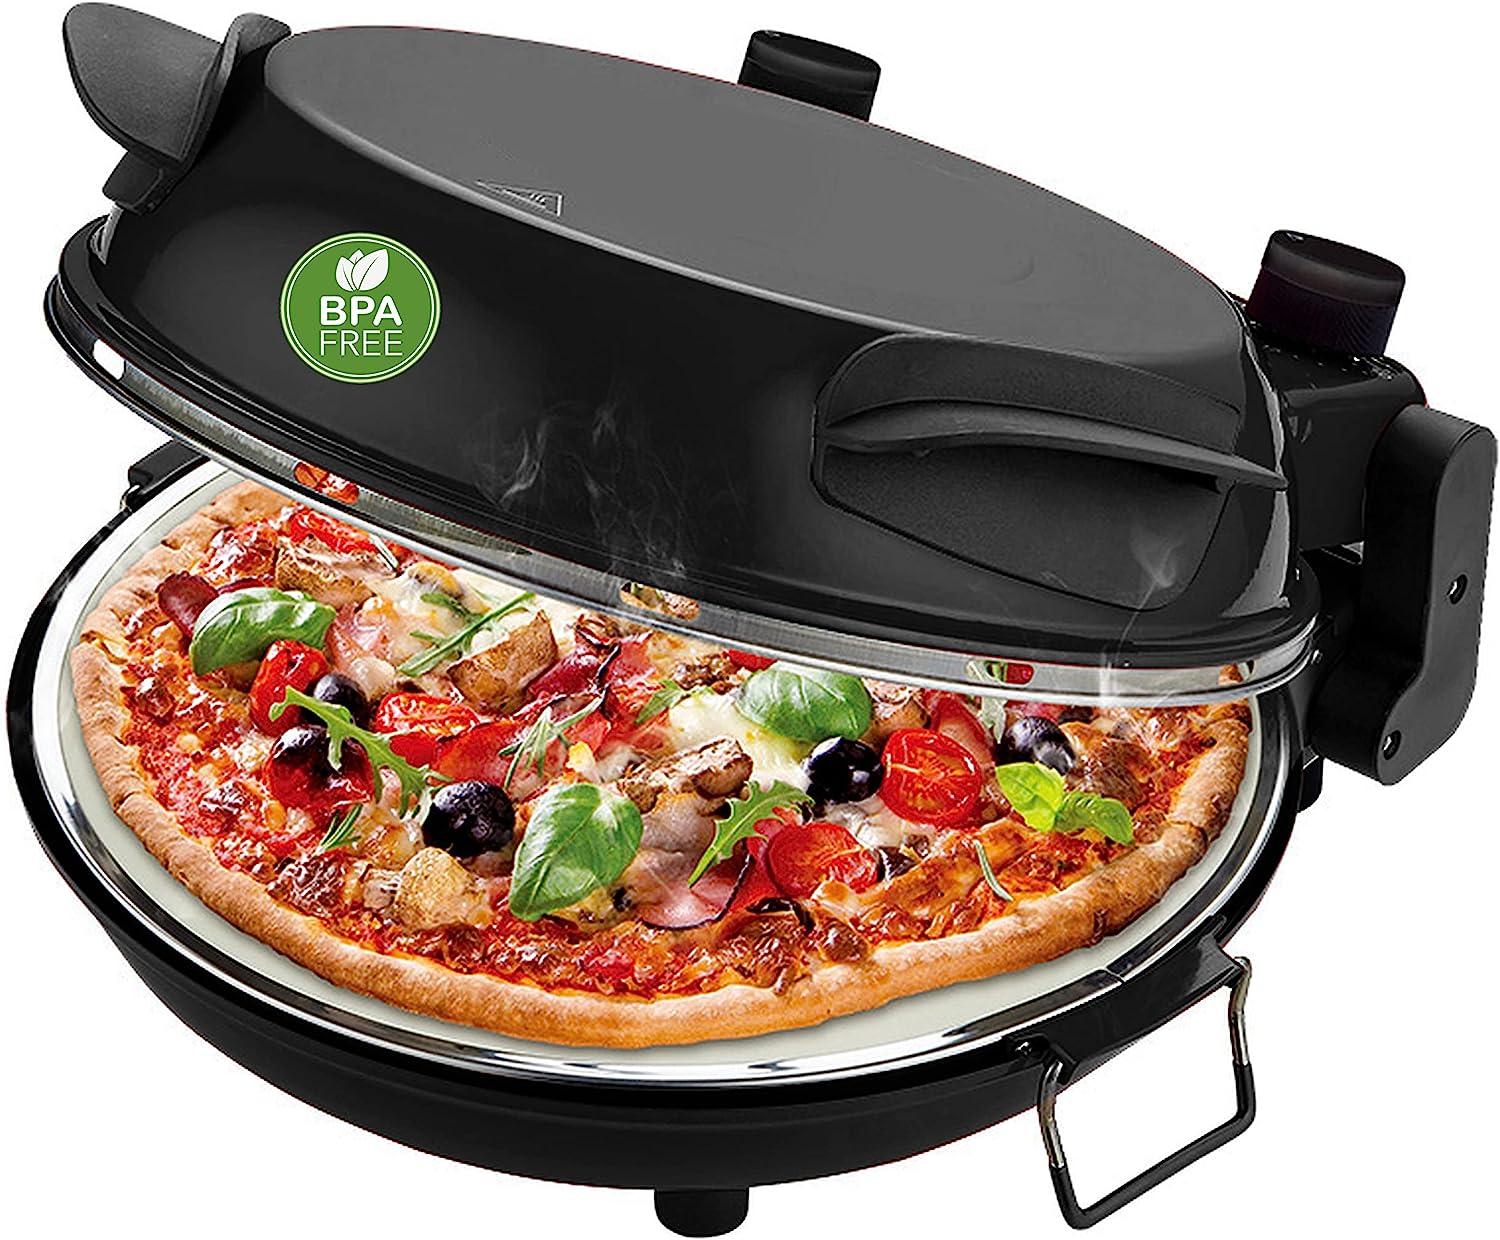 Emerio Pizza Oven, Fireproof Stone Plate, Bakes Pizza in Short Time (i.e. for TK Pizza), 31.5 cm diameter, 1200 watts, Timer, BPA Free, Stainless Steel Pizza Server, PM-129032.2, Black